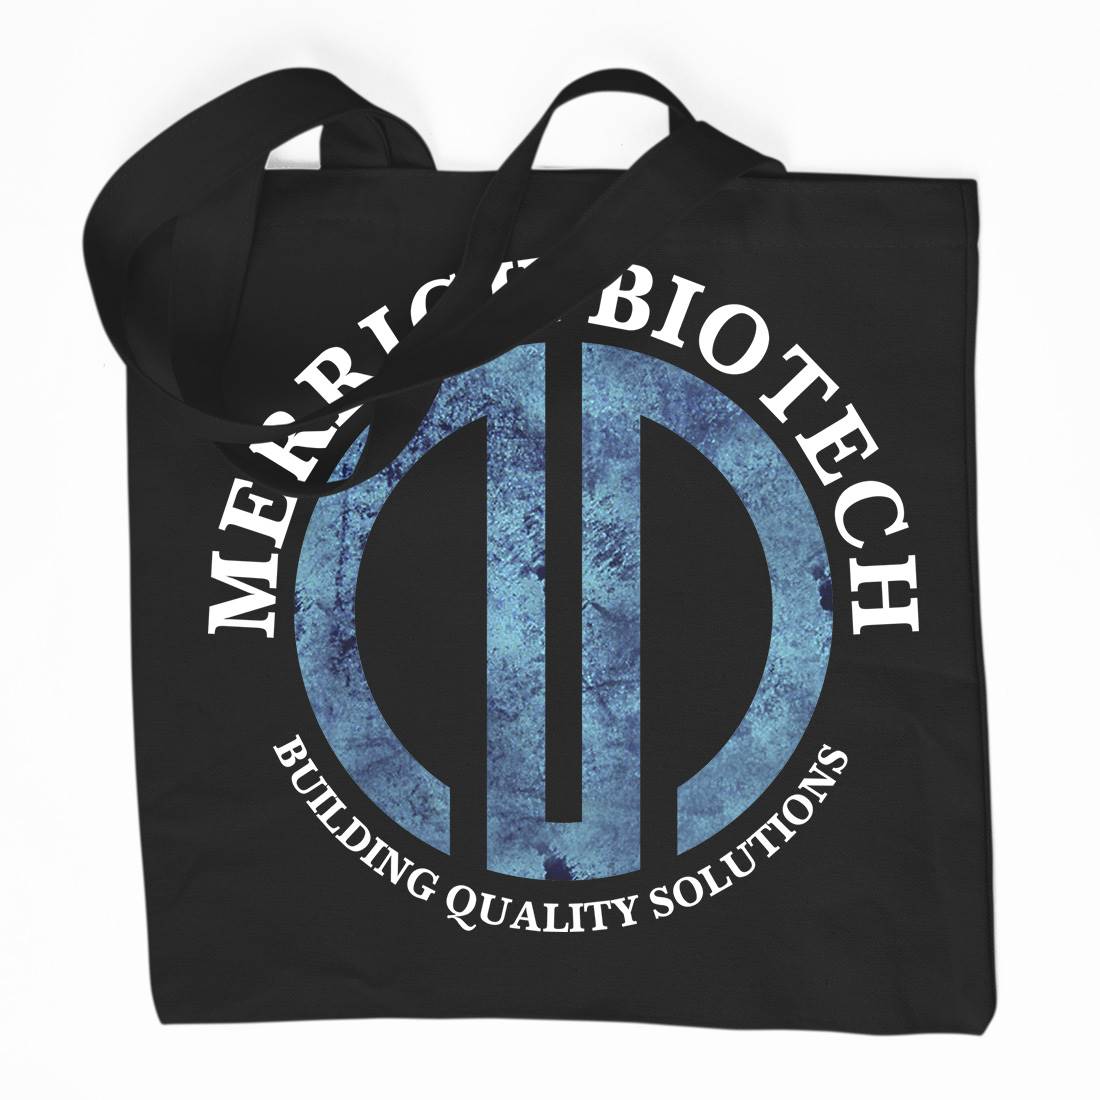 Merrick Biotech Organic Premium Cotton Tote Bag Space D393